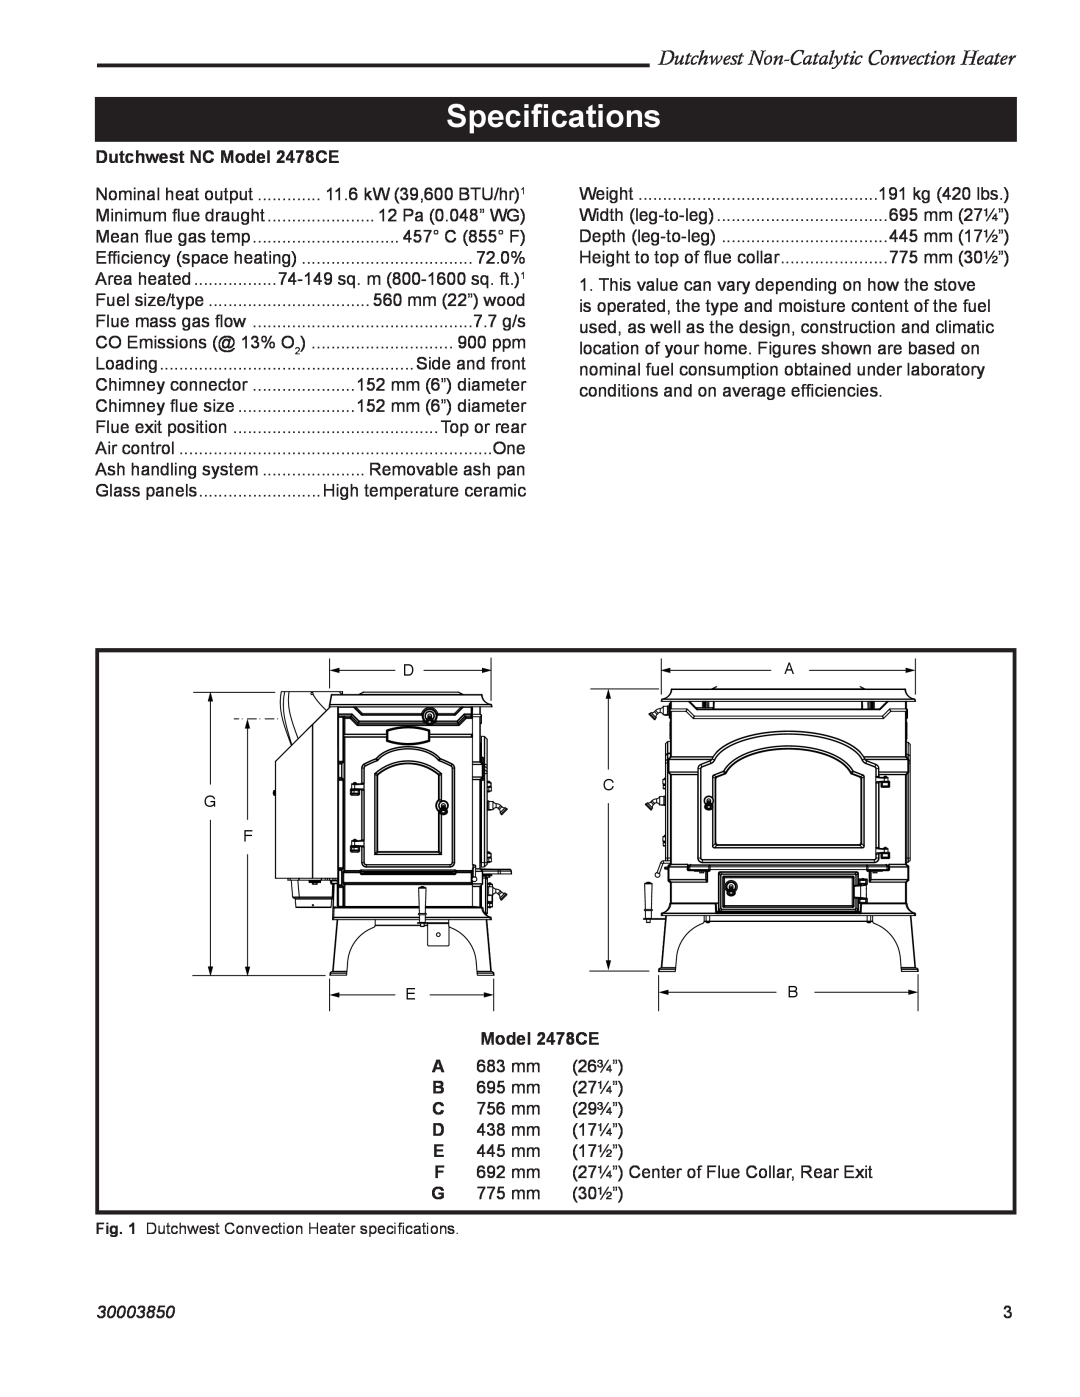 Vermont Casting manual Speciﬁcations, Dutchwest Non-CatalyticConvection Heater, Dutchwest NC Model 2478CE, 30003850 